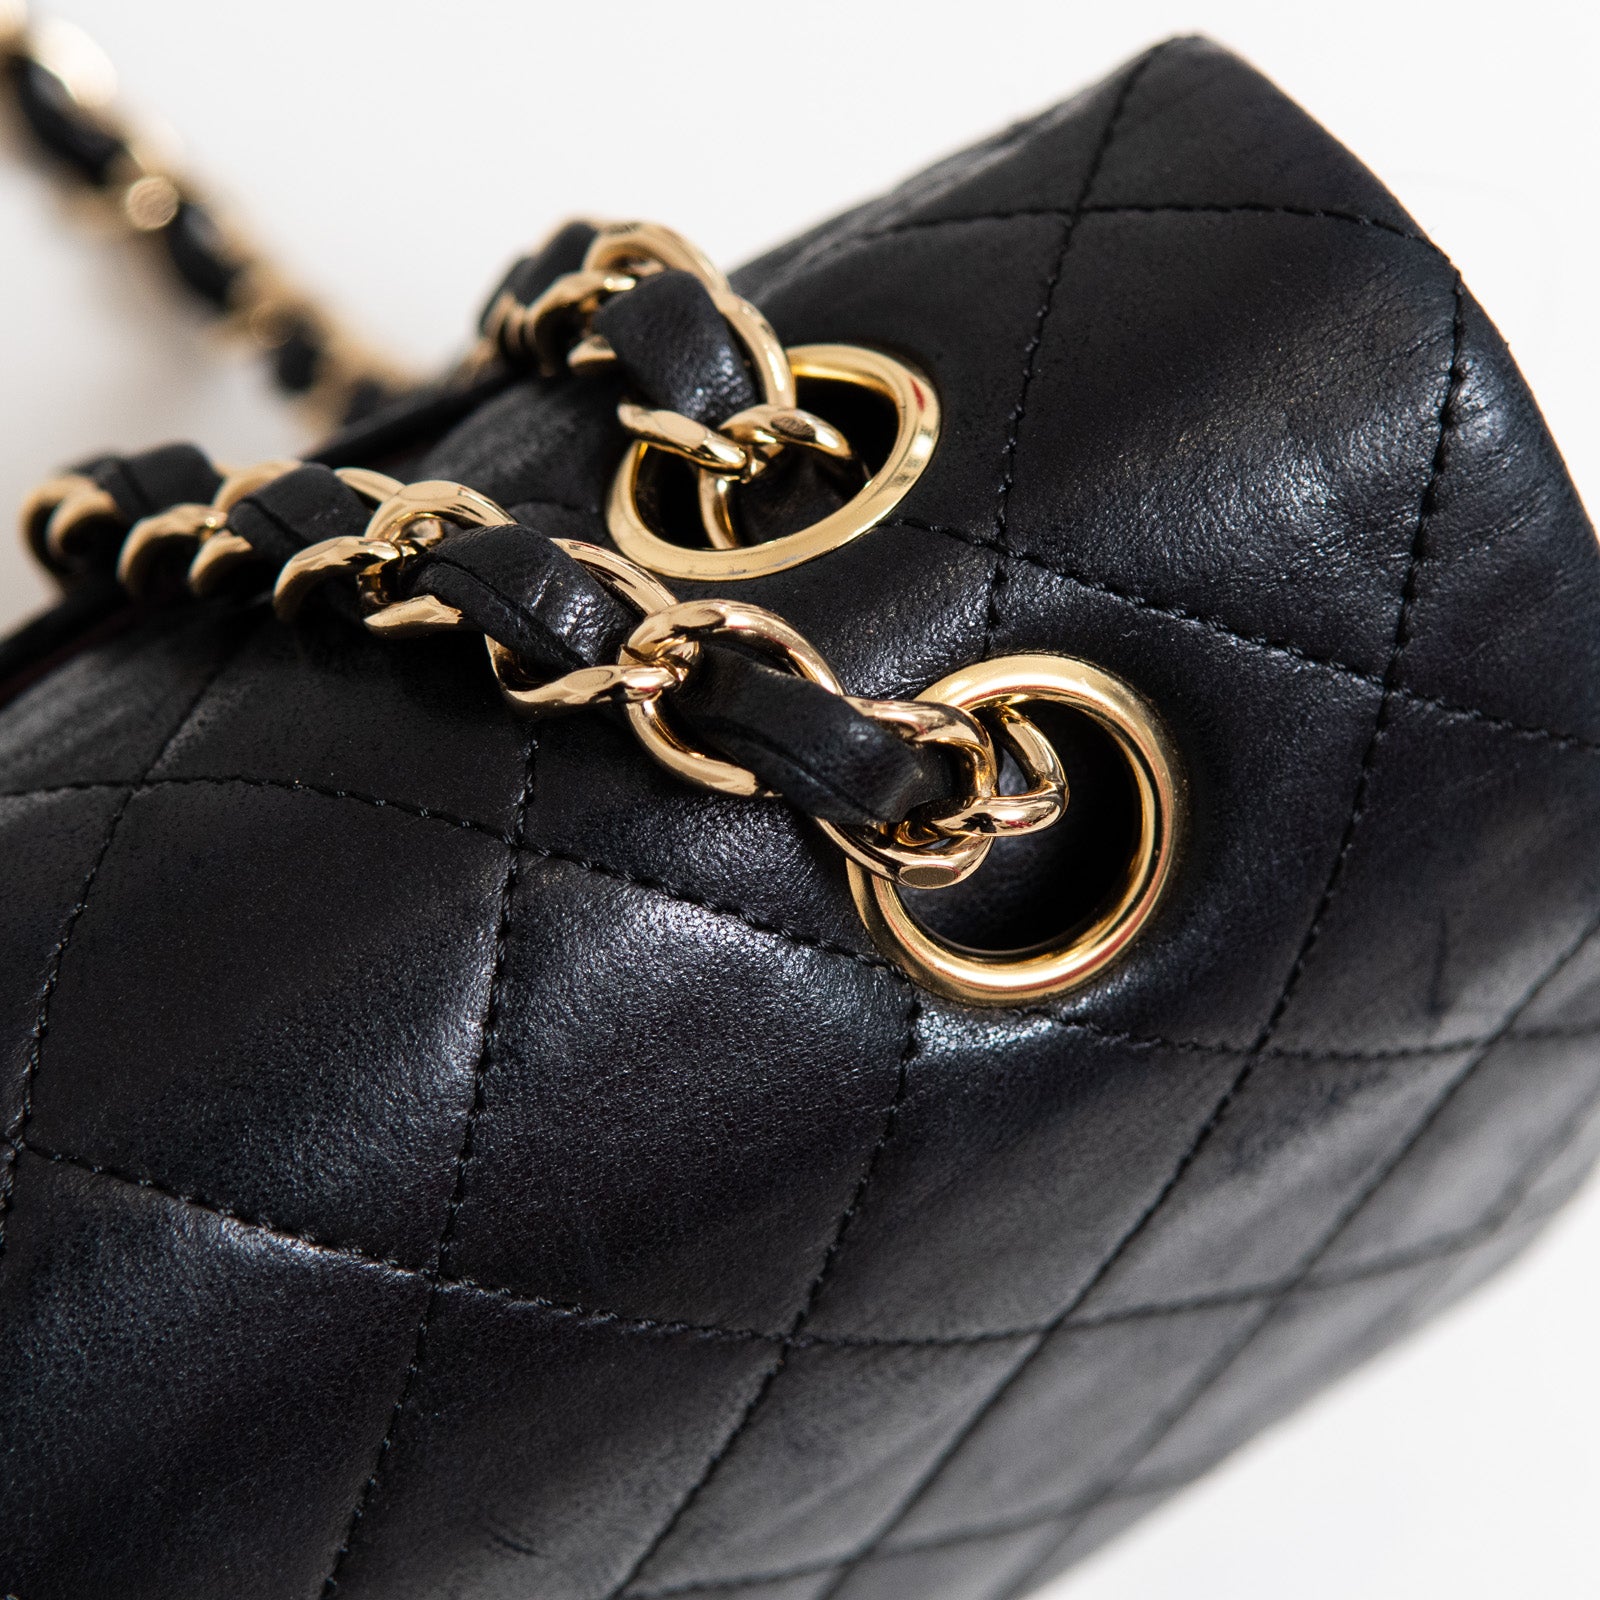 Chanel Black Medium Double Flap Bag - Image 4 of 14